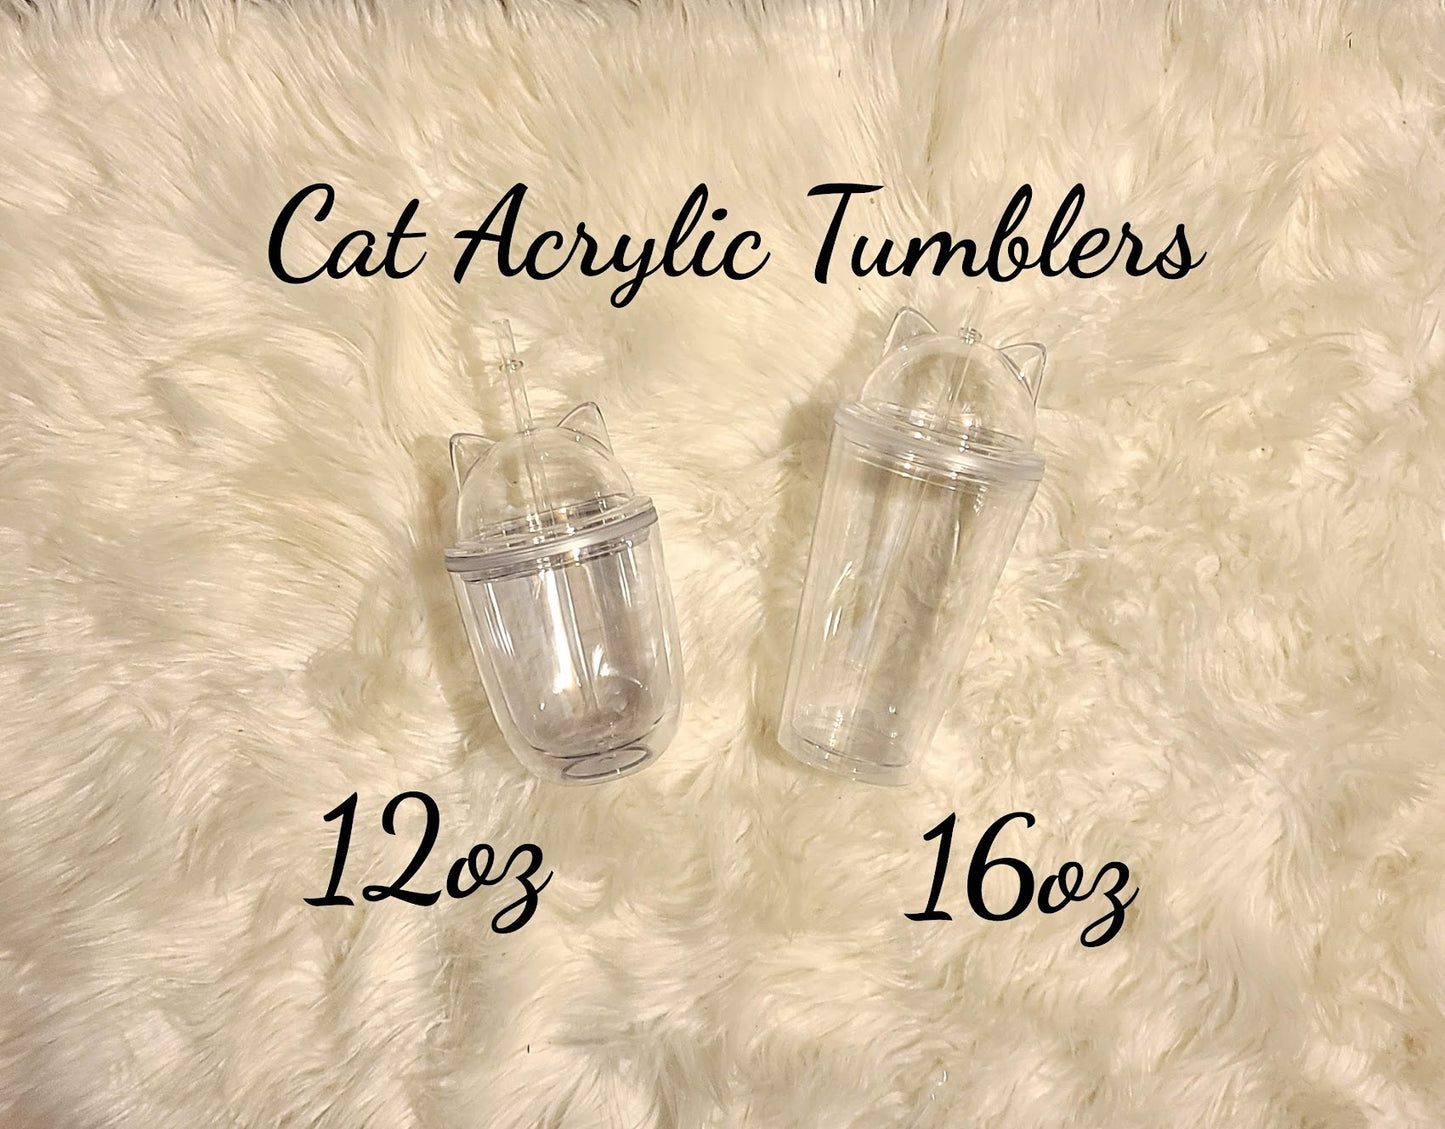 Cat Acrylic Flow Tumbler